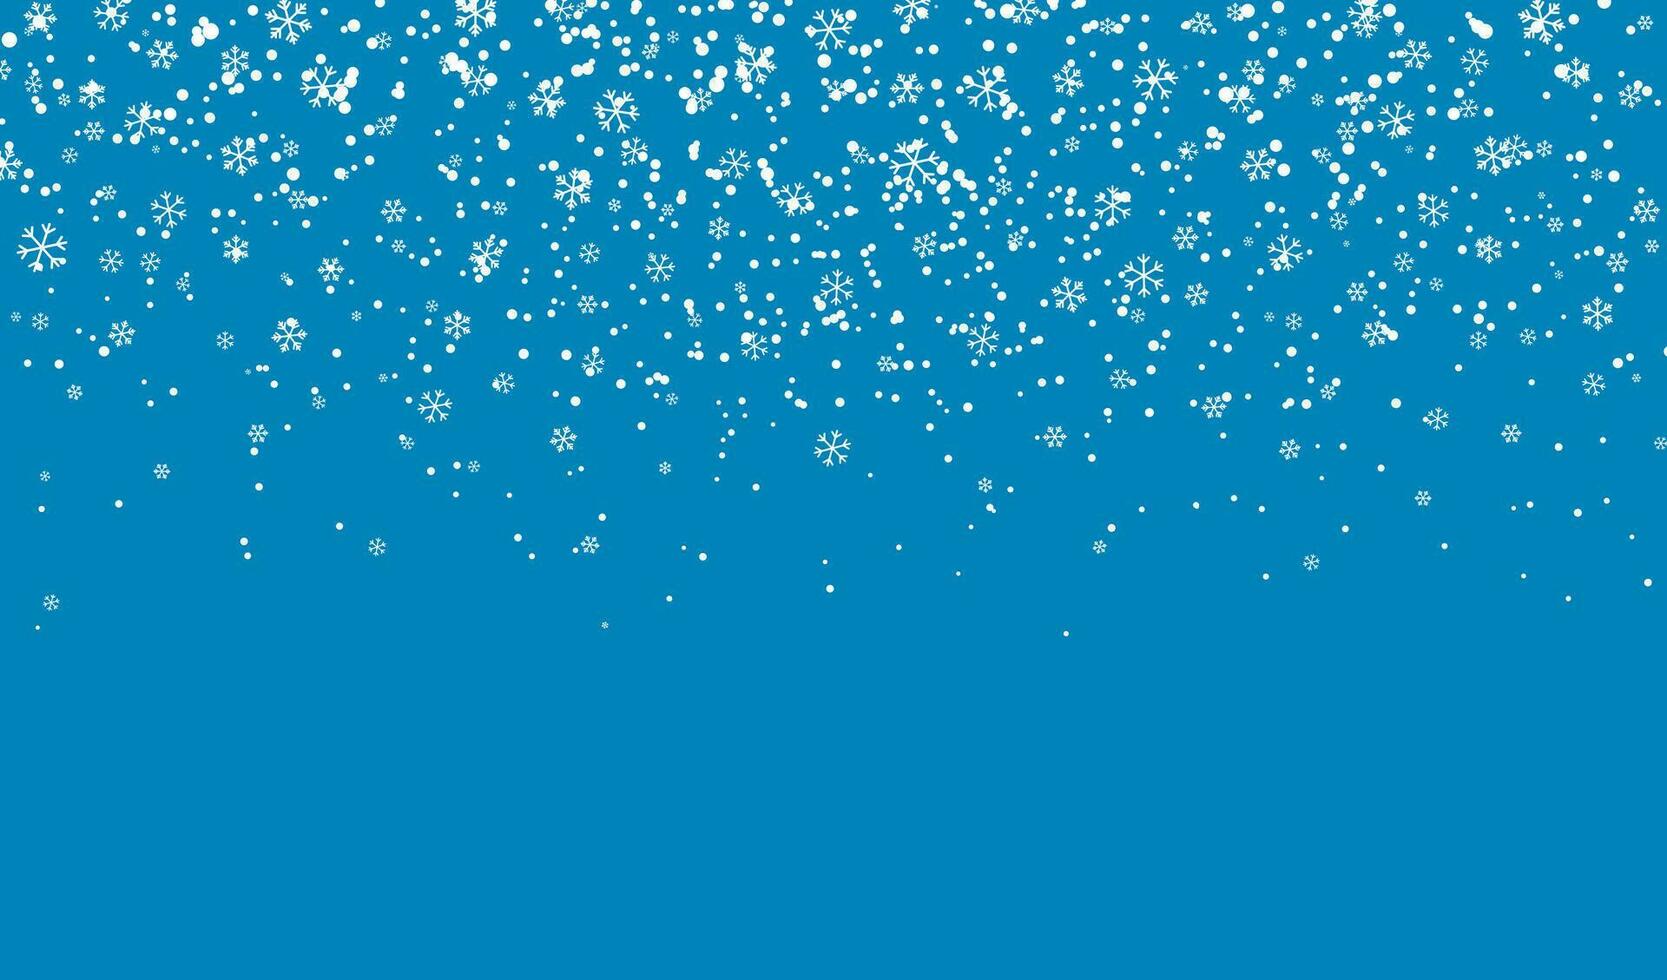 faller snöflingor på blå bakgrund. jul snö. vektor illustration